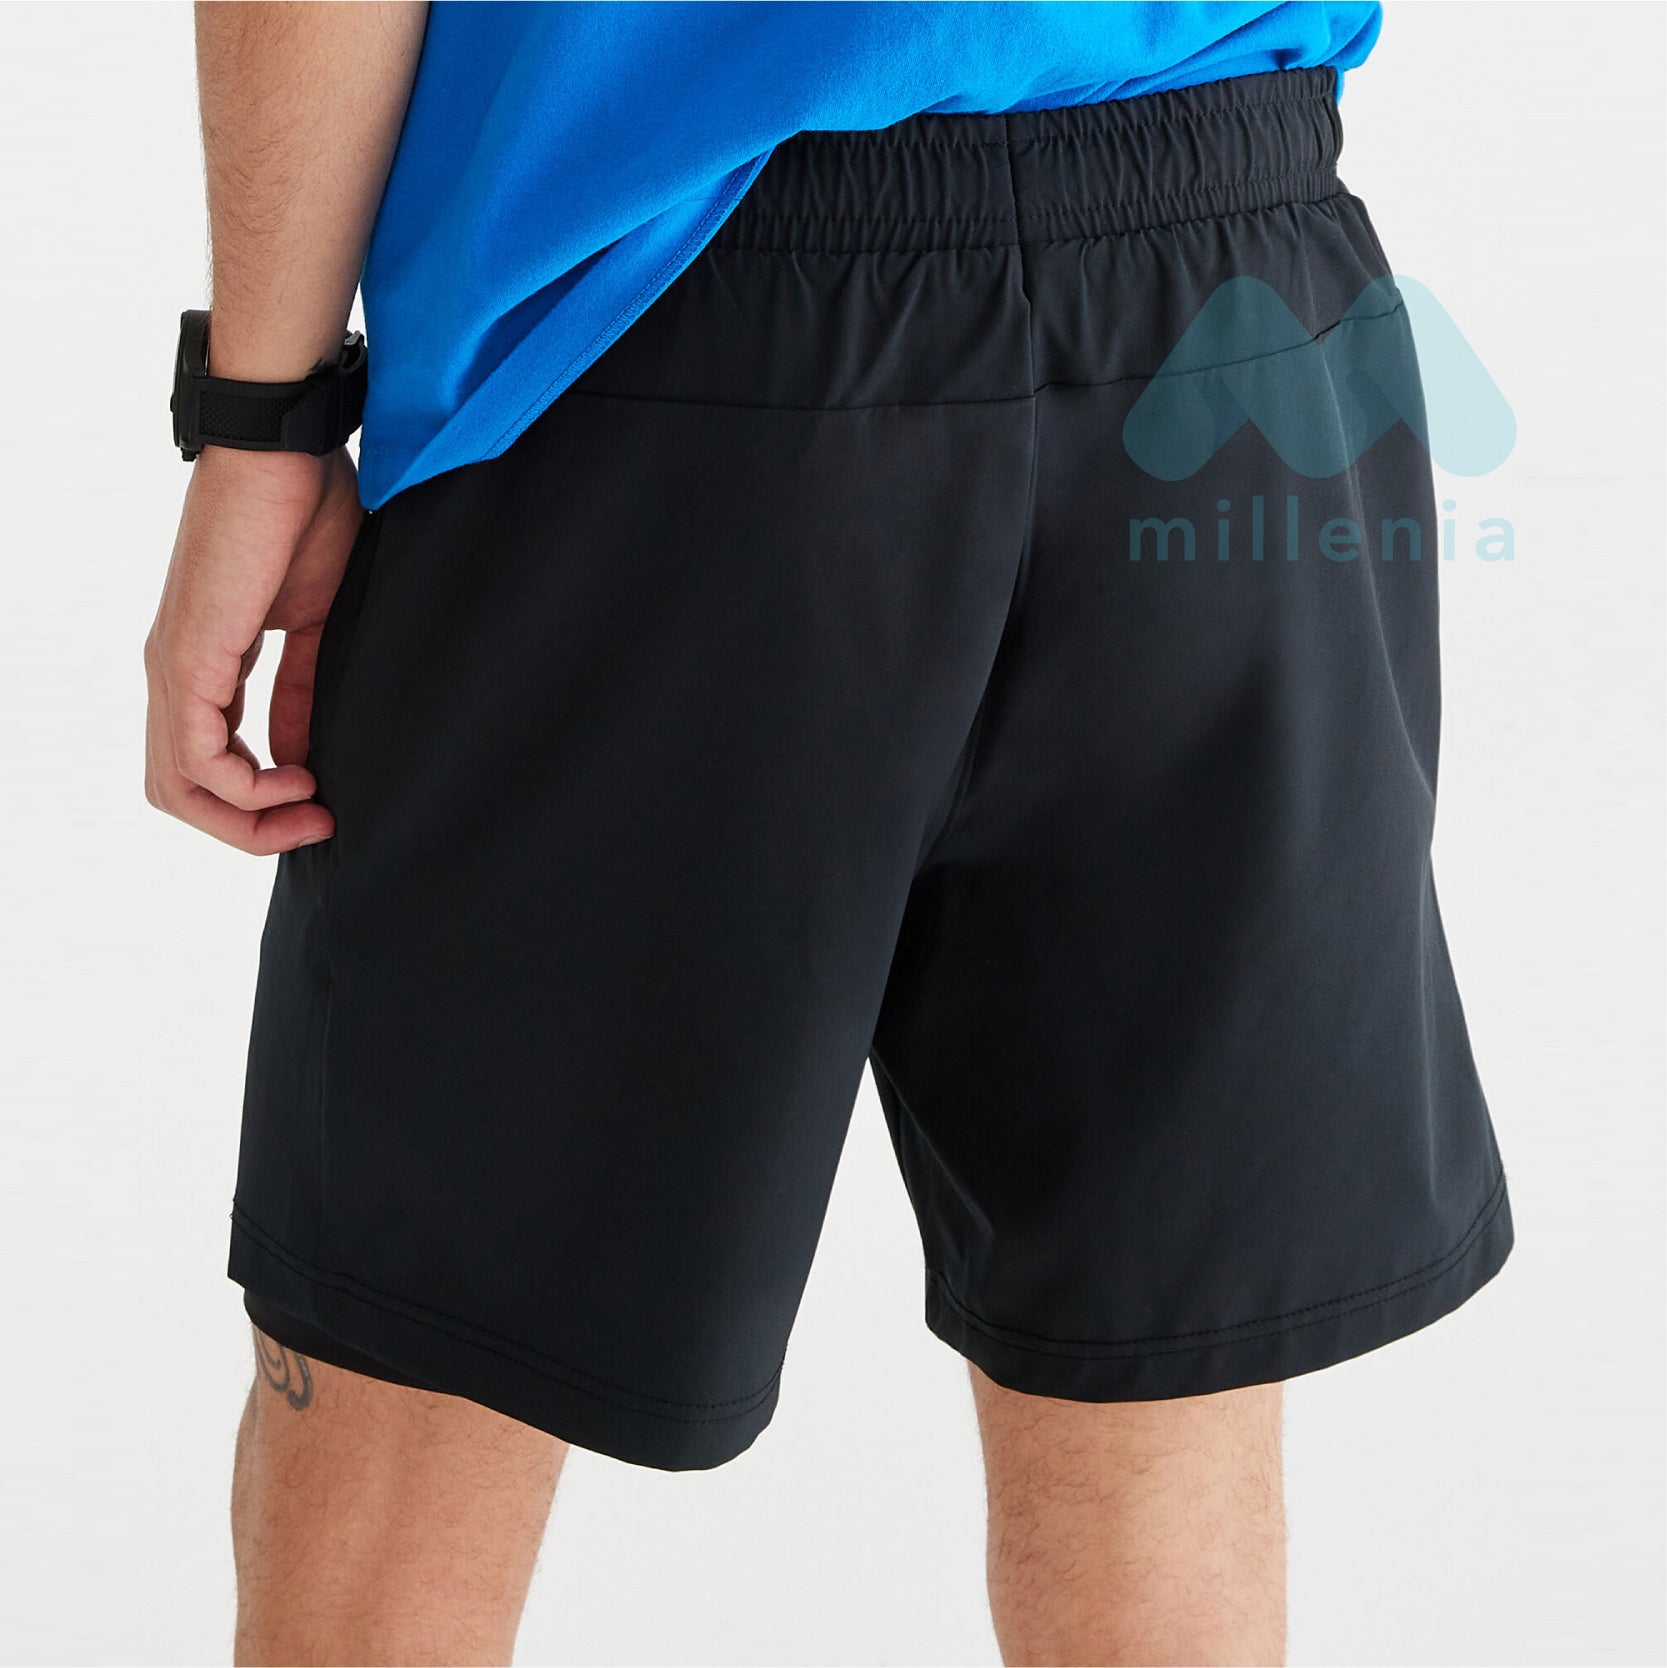 Celana Pendek Olahraga Pria Tersedia 2 Warna (MO-APSM 02)